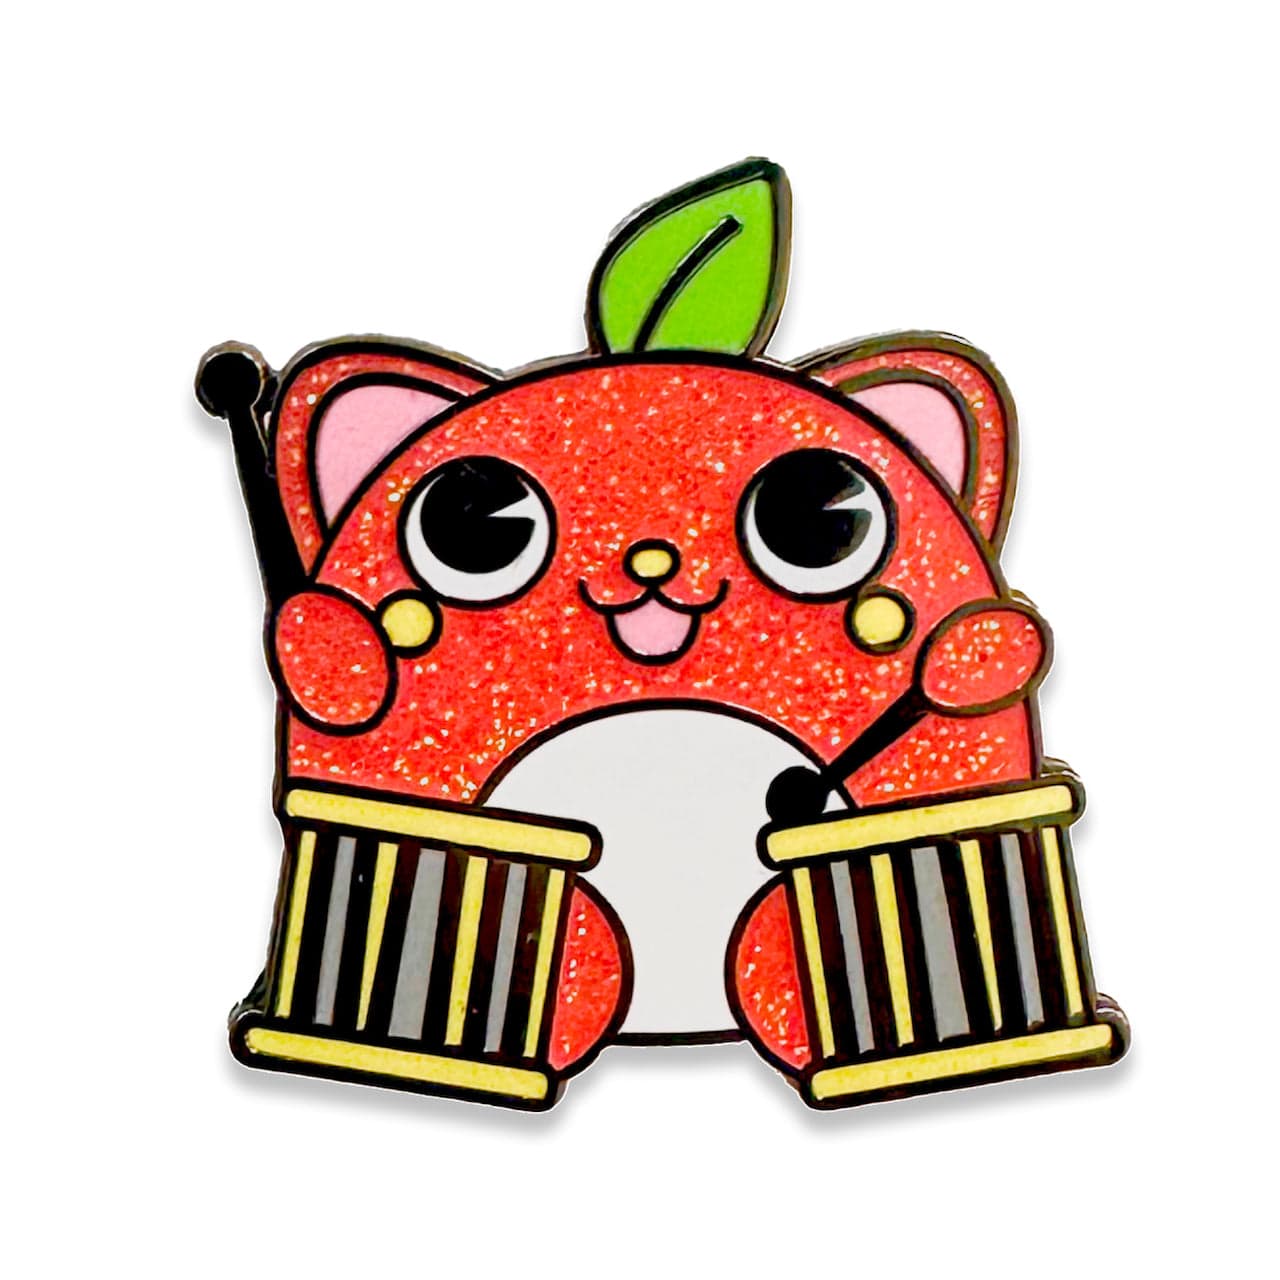 Pinbuds Enamel pin Apple drummer bear pin - Nyango star from Aomori prefecture (Japan Mascot collection)